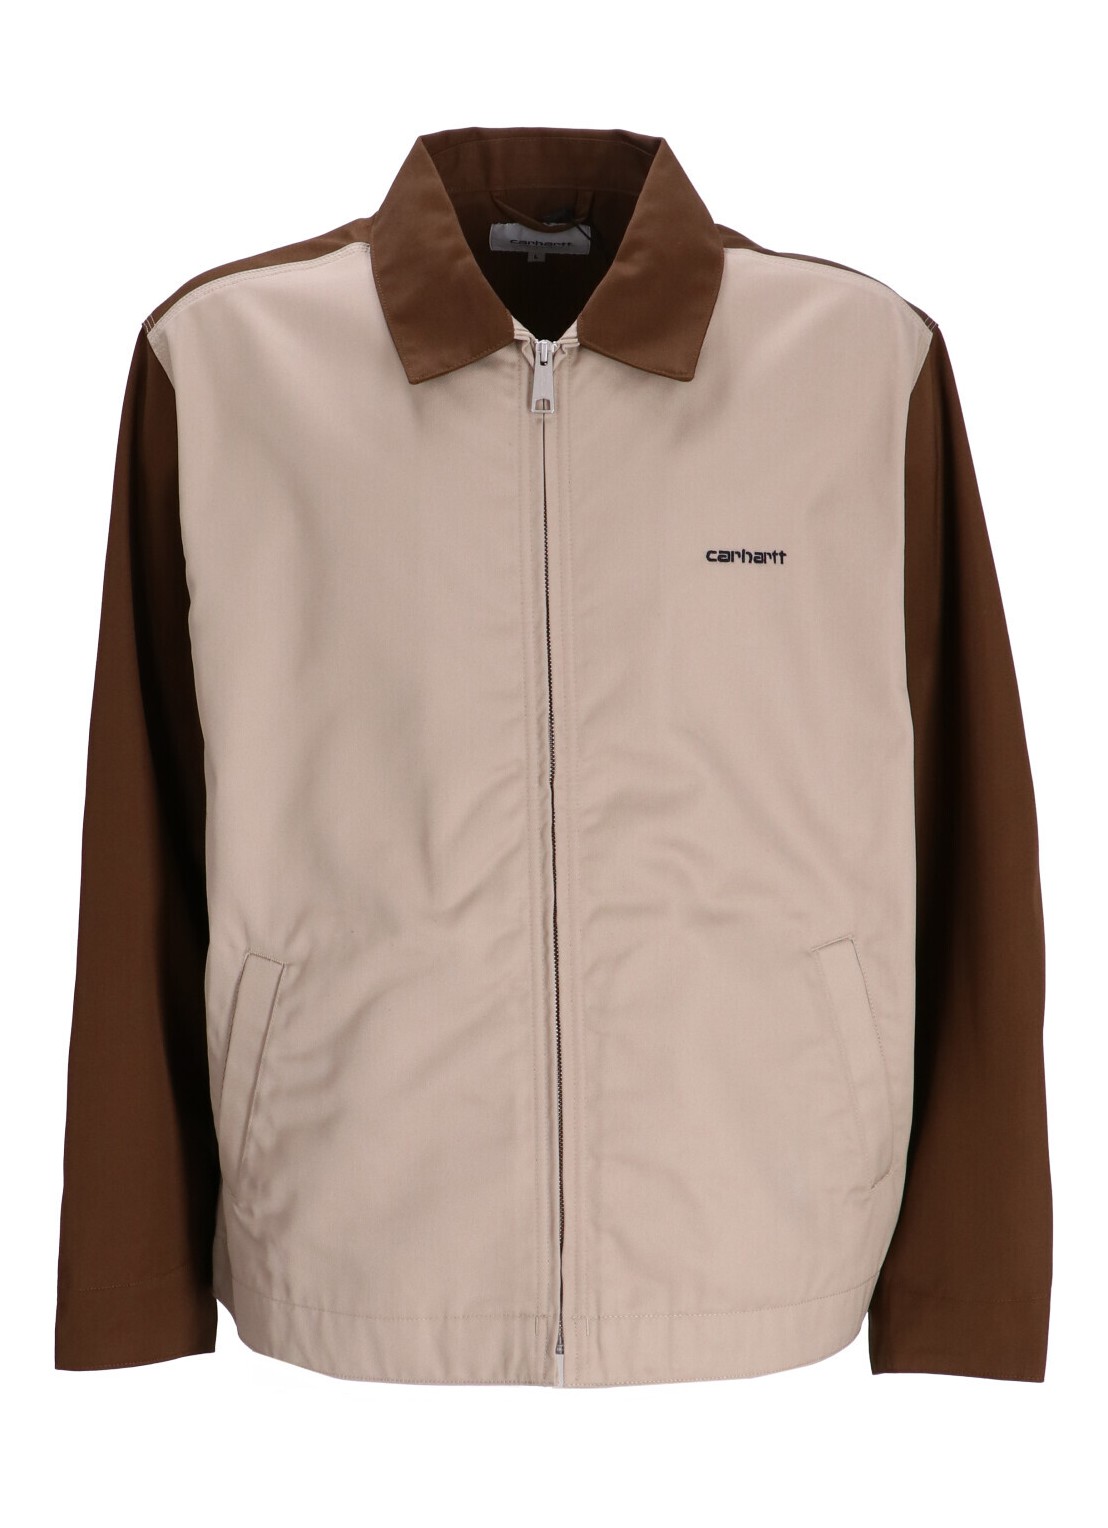 Outerwear carhartt outerwear manmodule script jacket - i032977 23n01 talla M
 